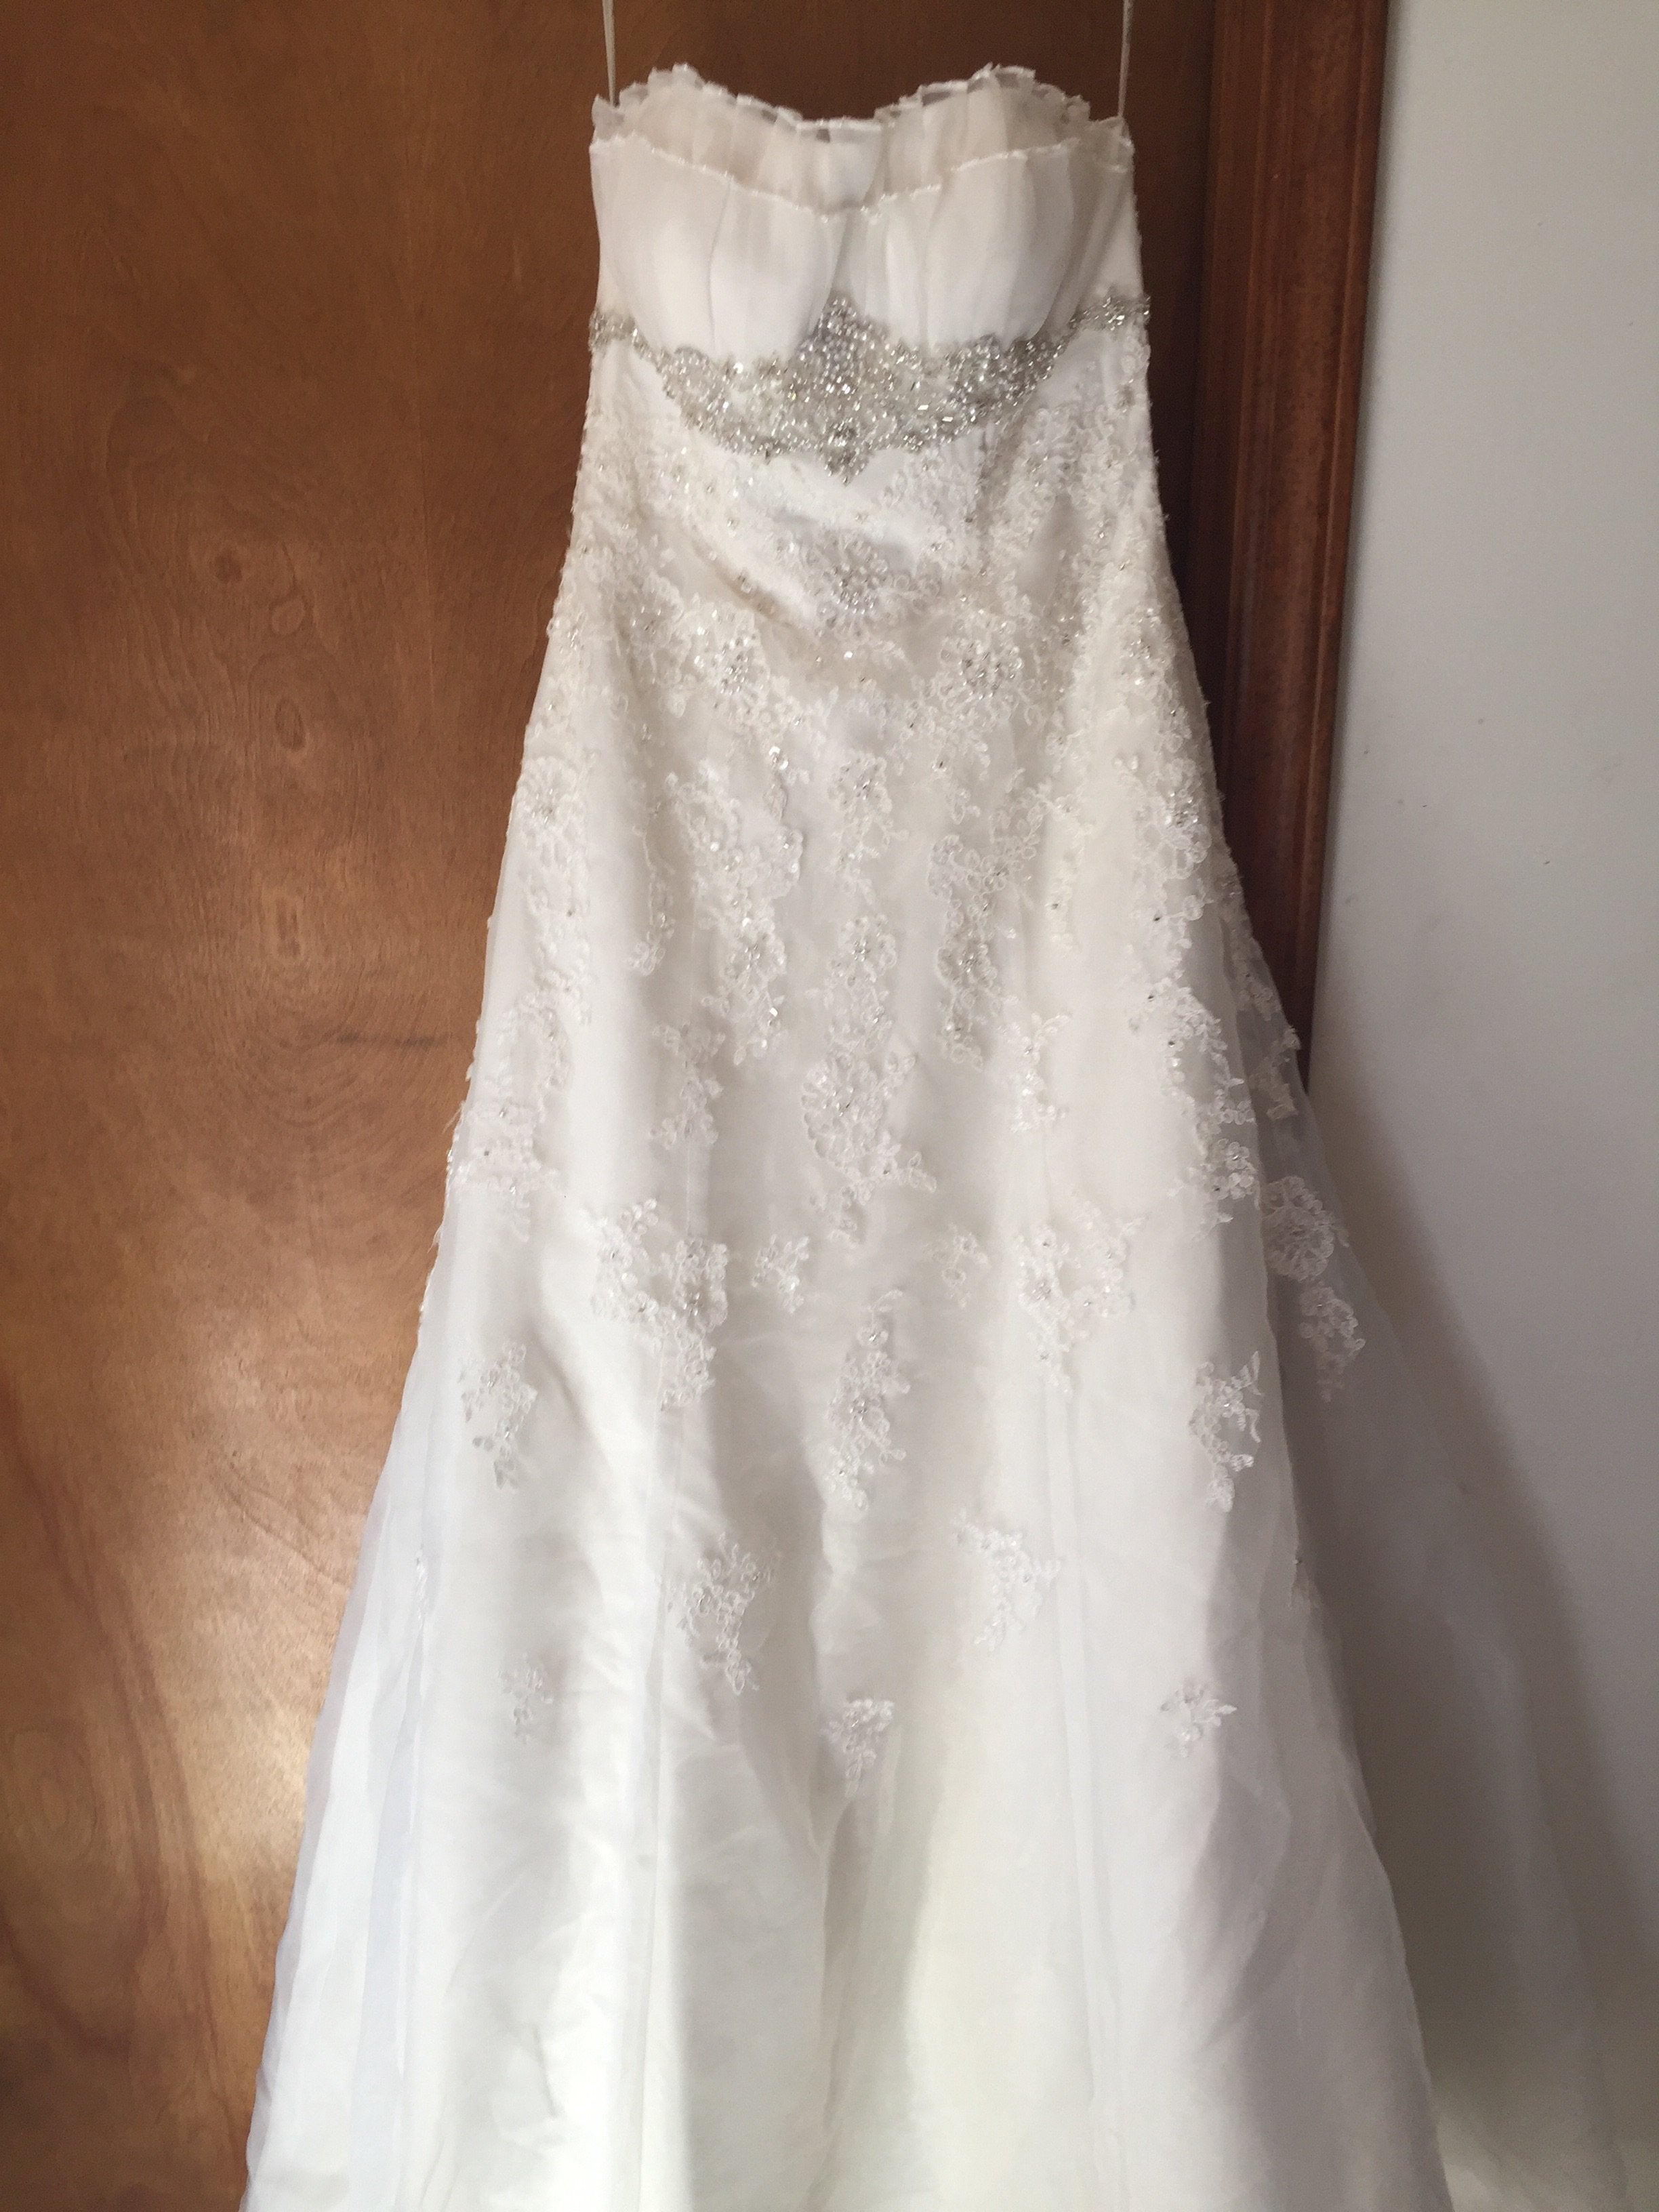 David's Bridal 'Ivory Lace' size 6 used wedding dress – Nearly Newlywed